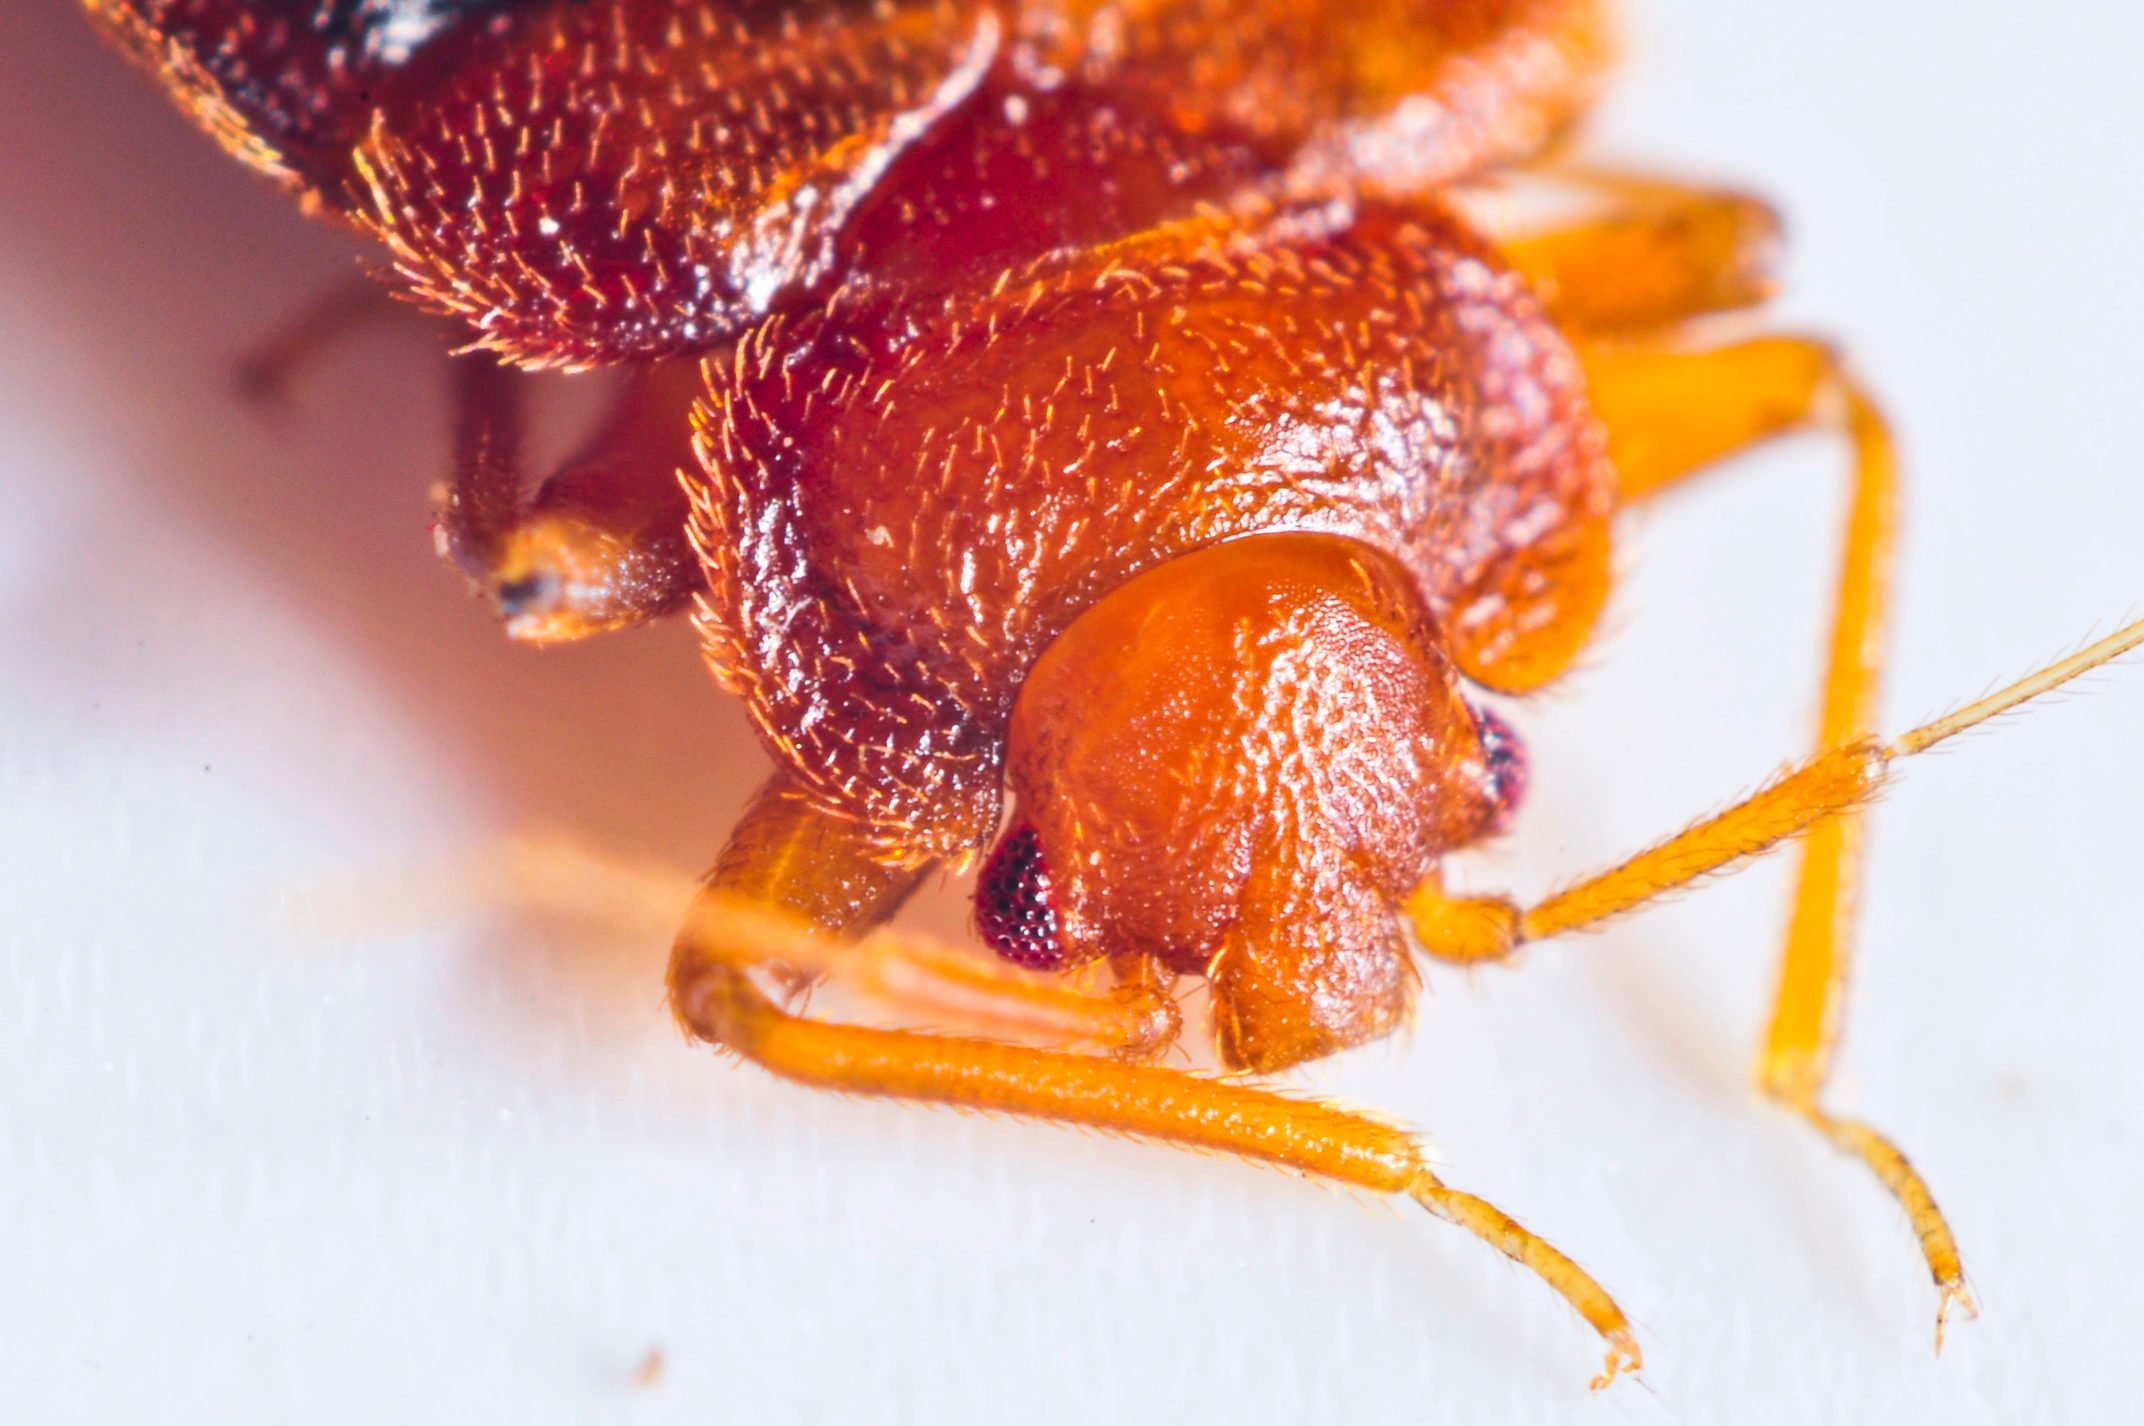 Bedbug close up